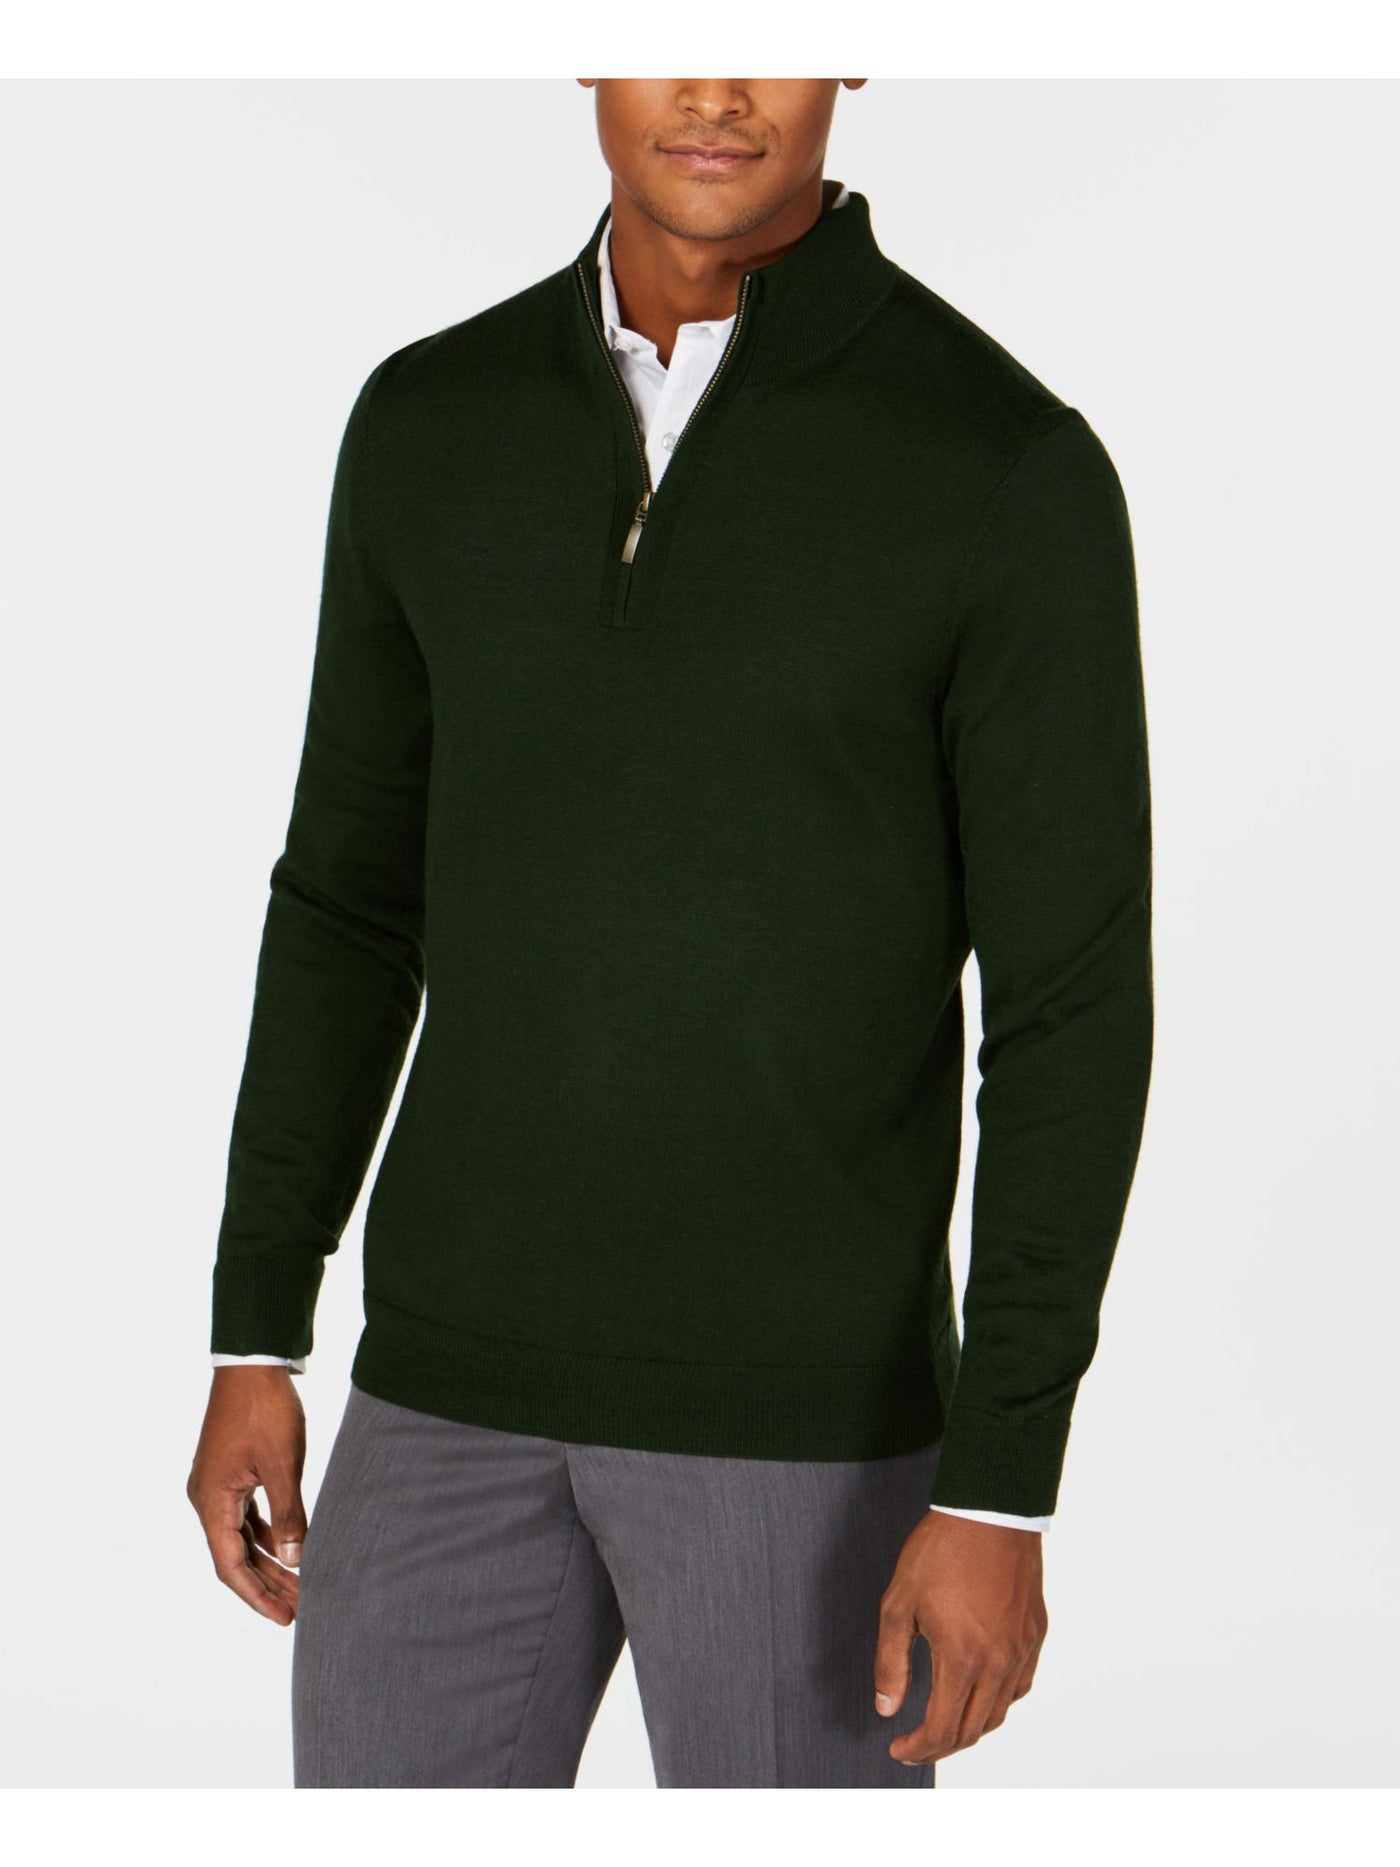 CLUBROOM Mens Green Quarter-Zip Wool Blend Pullover Sweater S